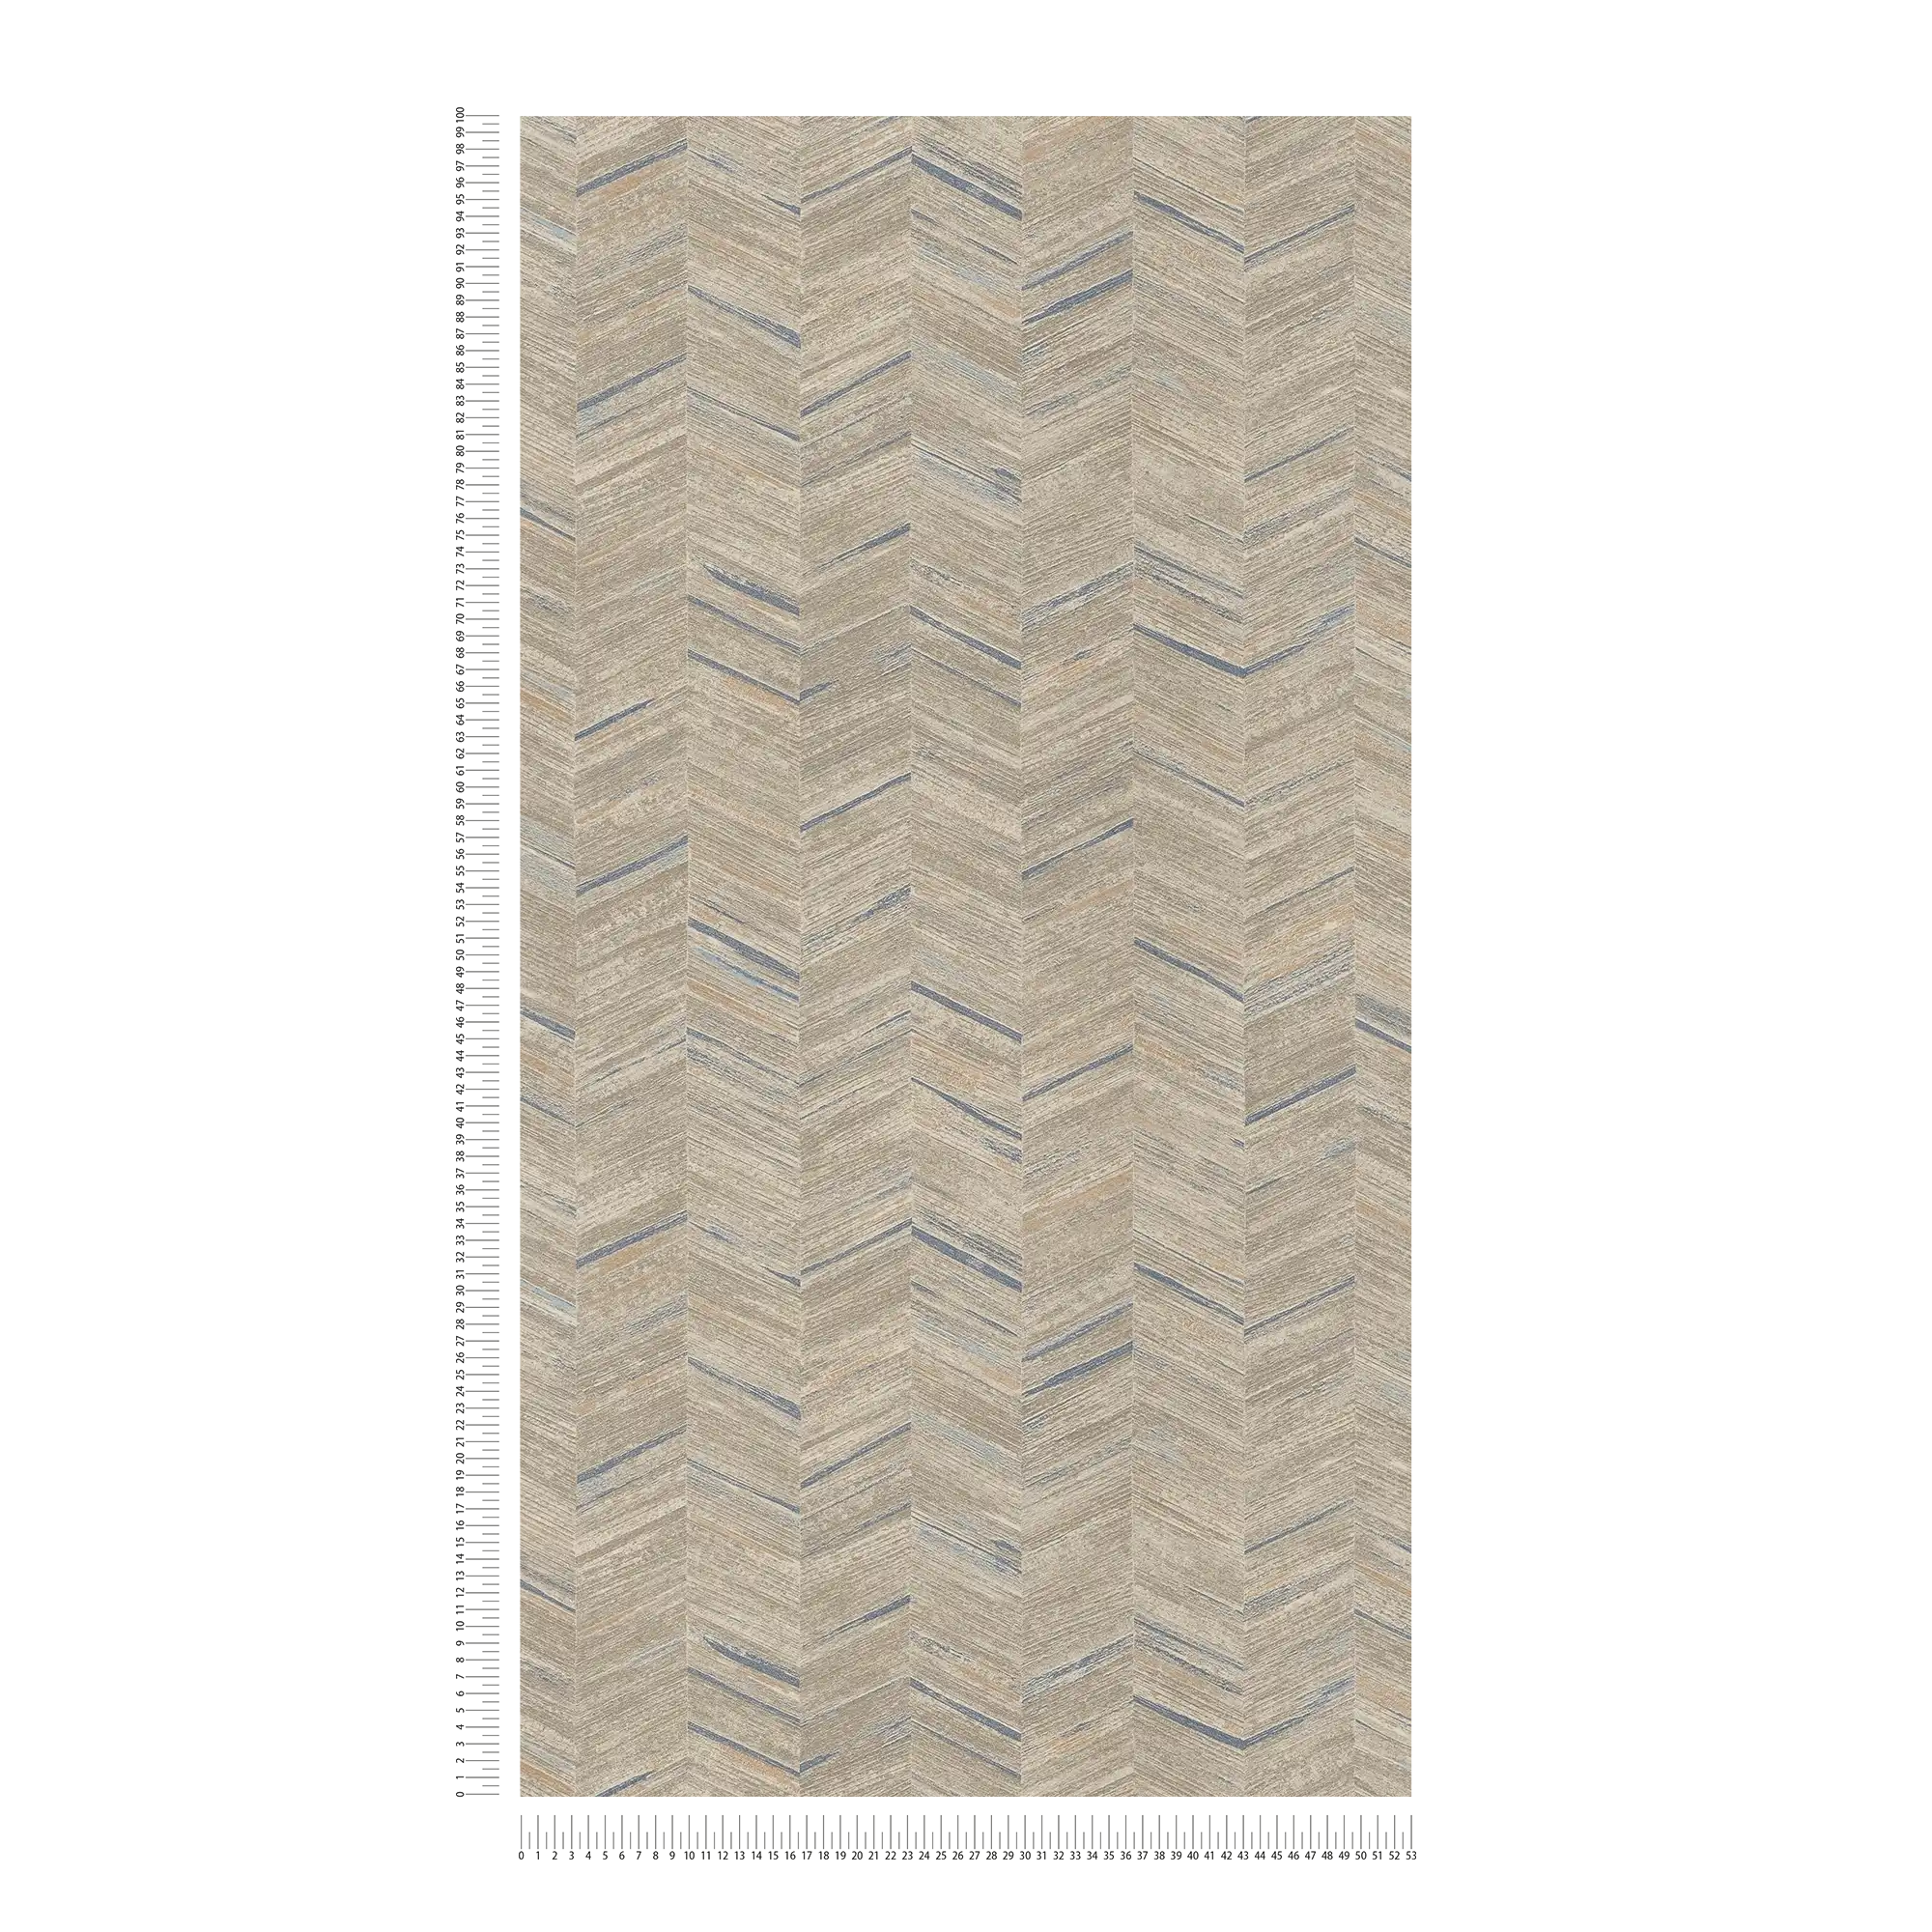             Wood look wallpaper herringbone and ethnic style - beige, grey
        